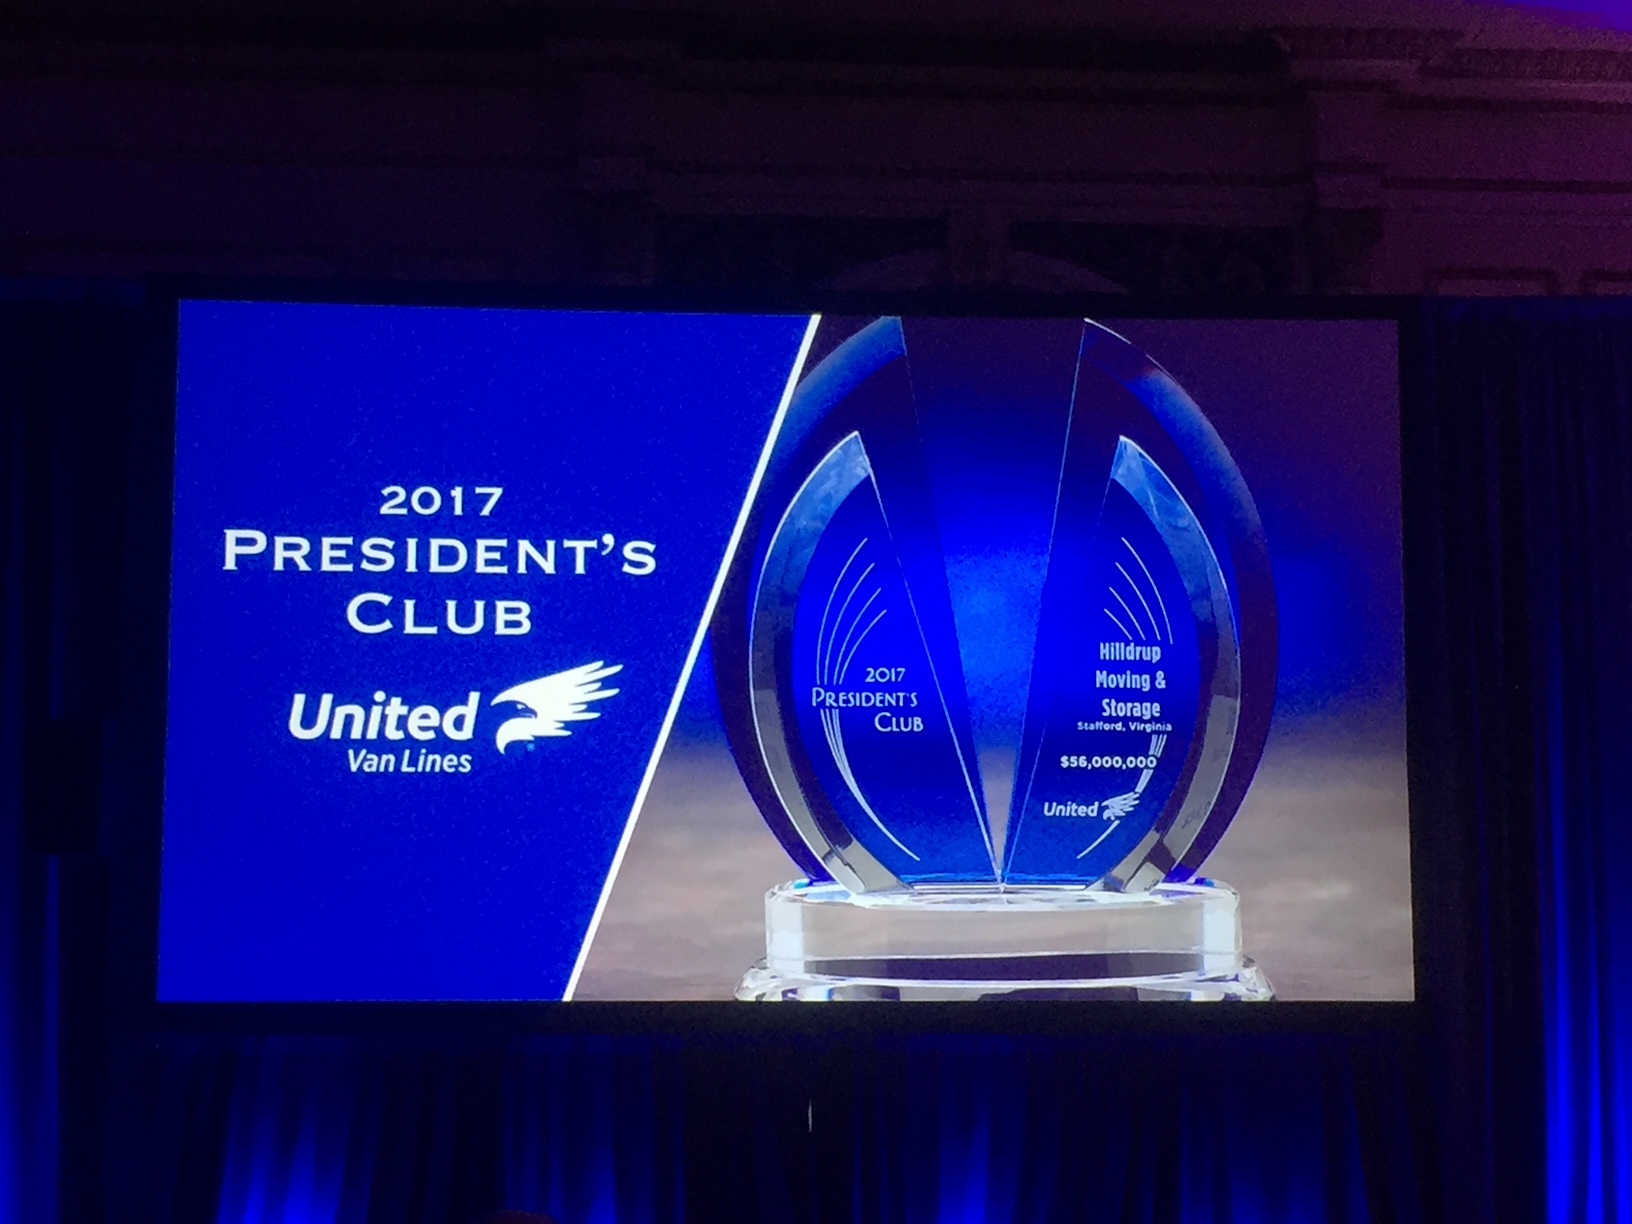 2017 President's Club award on screen